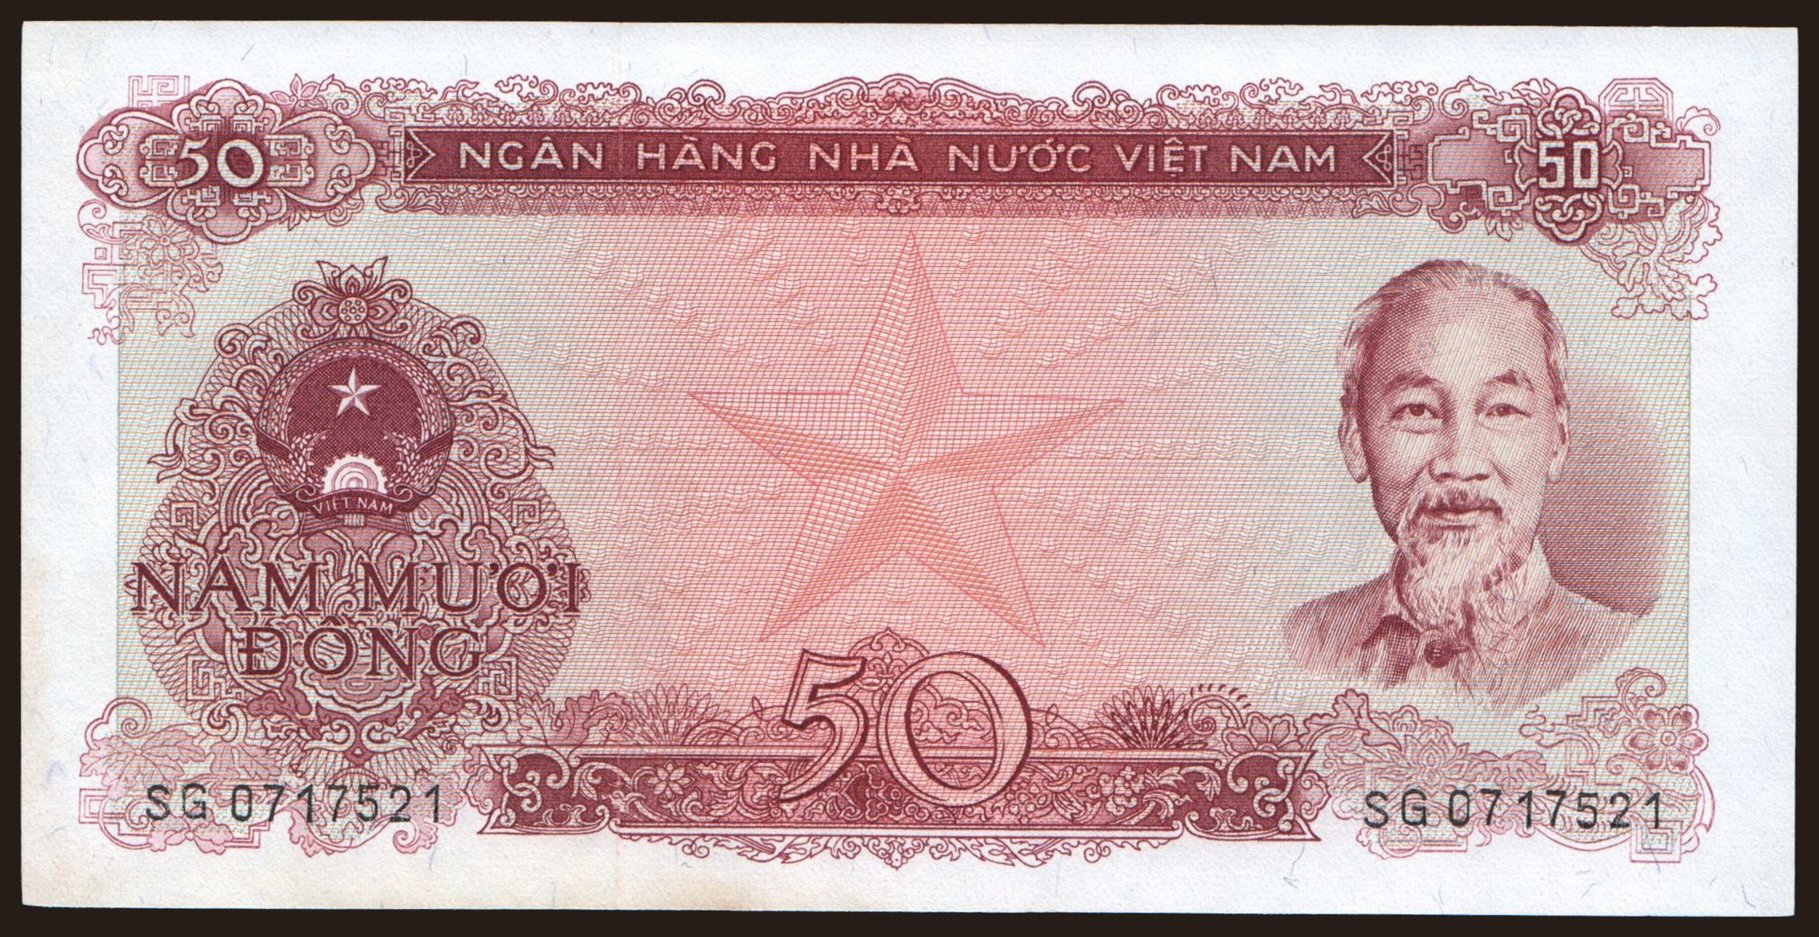 50 dong, 1976